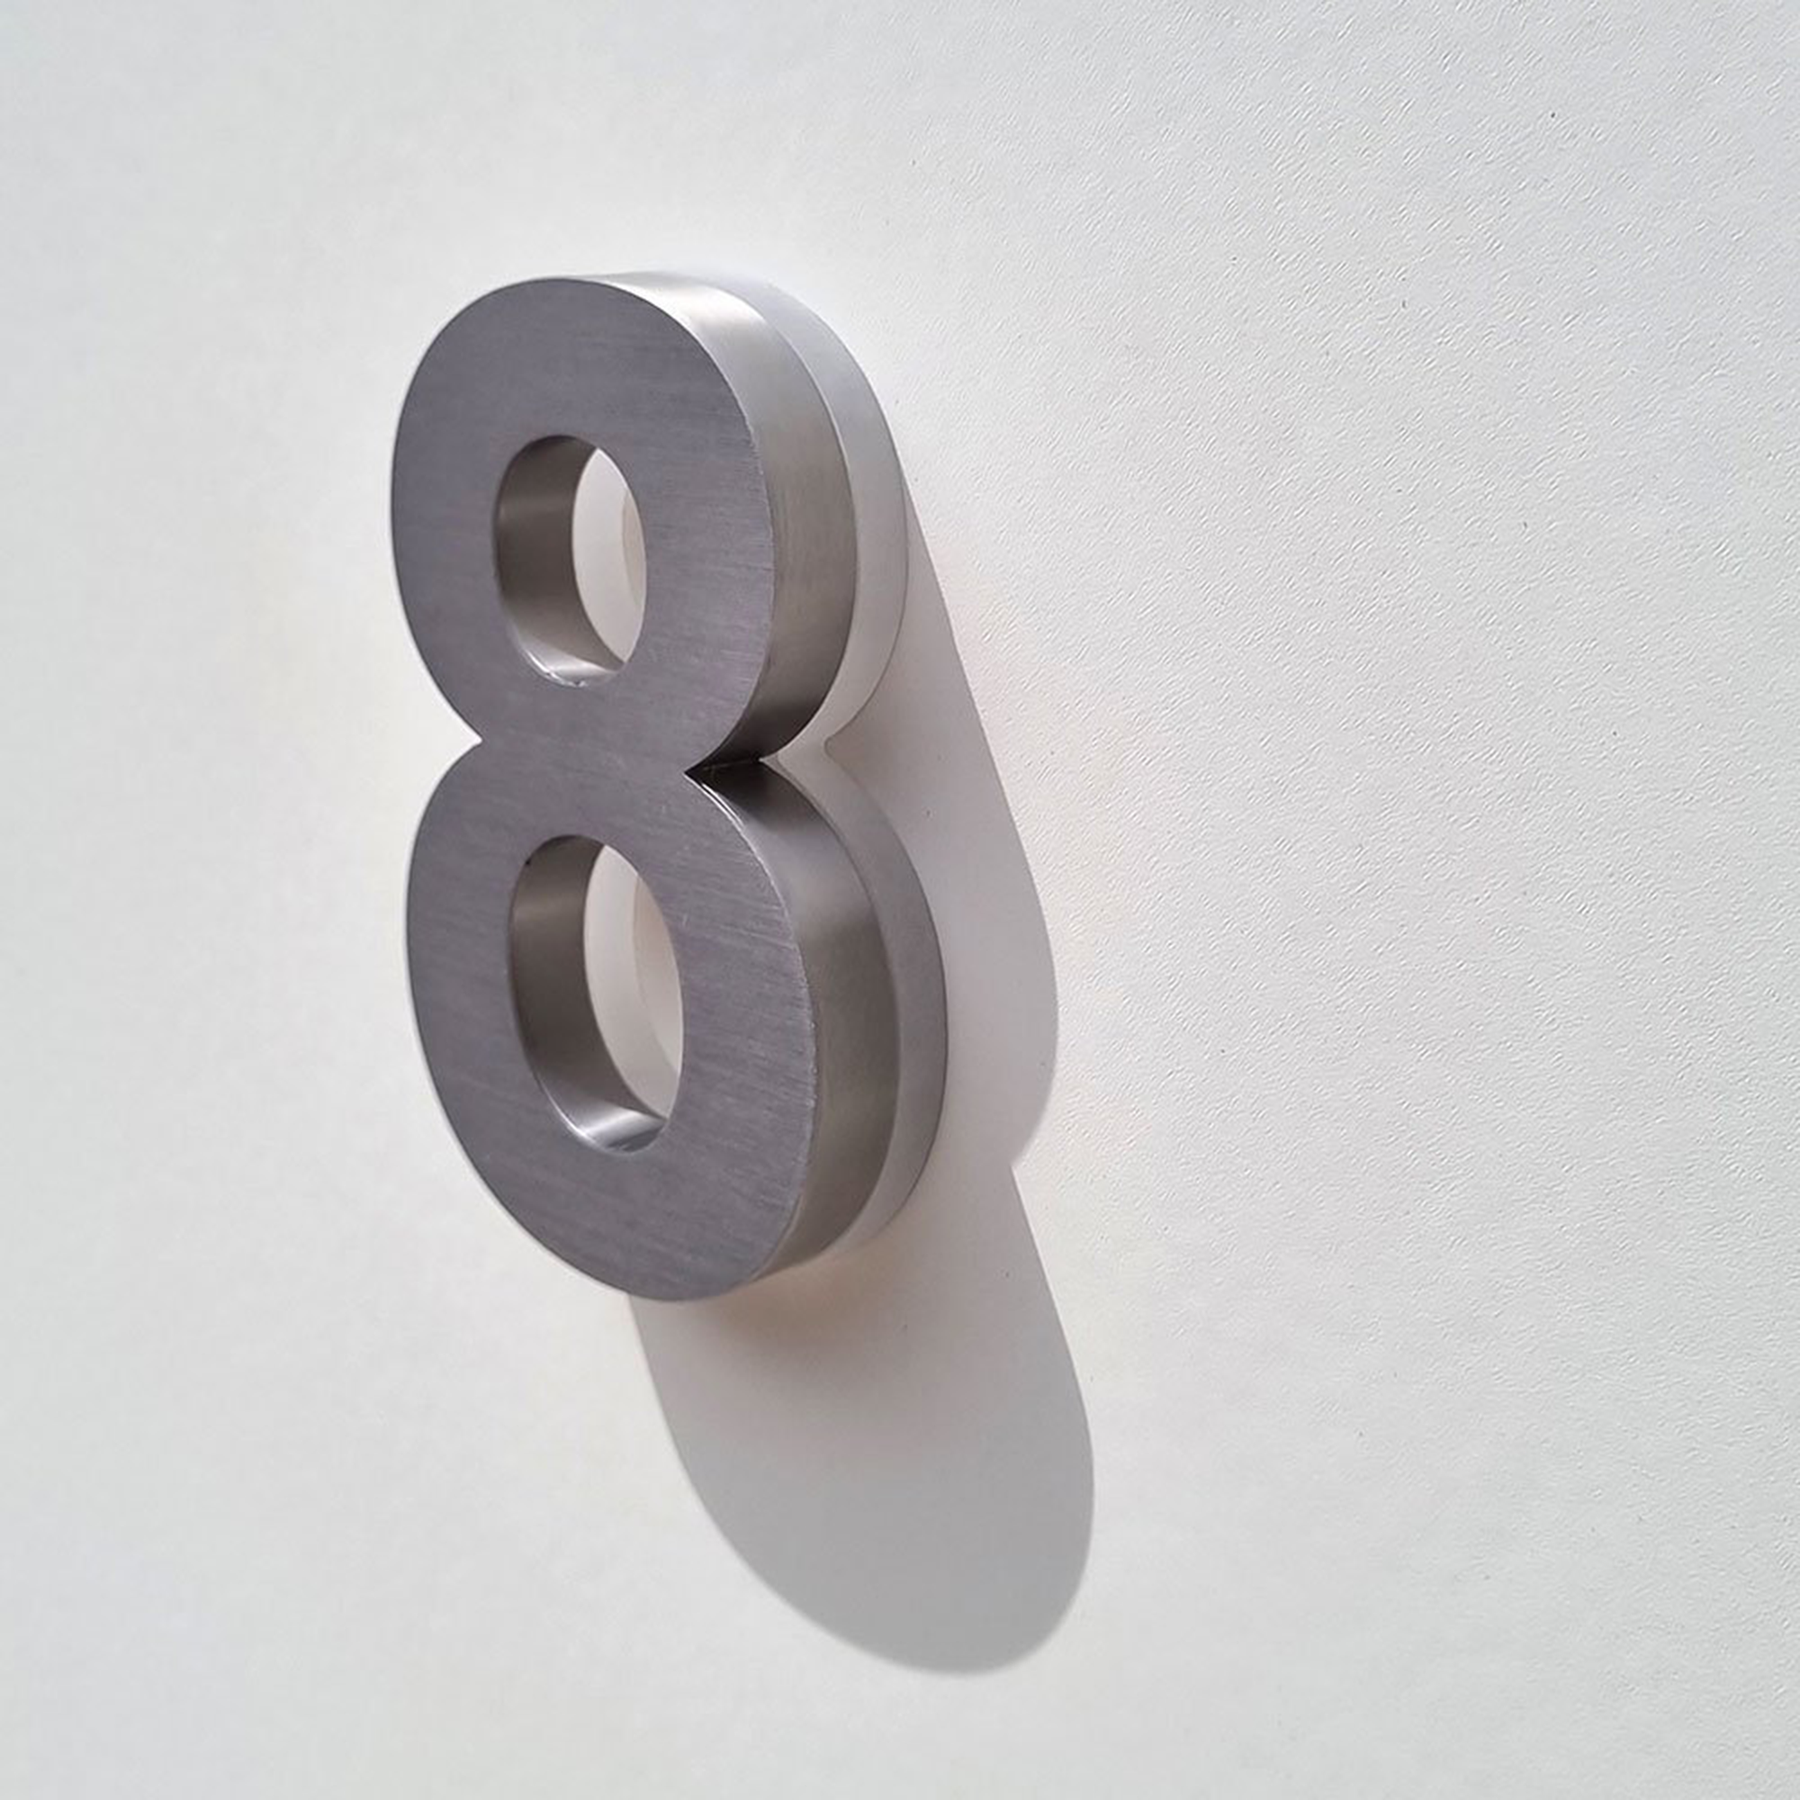 Backlit LED House Address Numbers